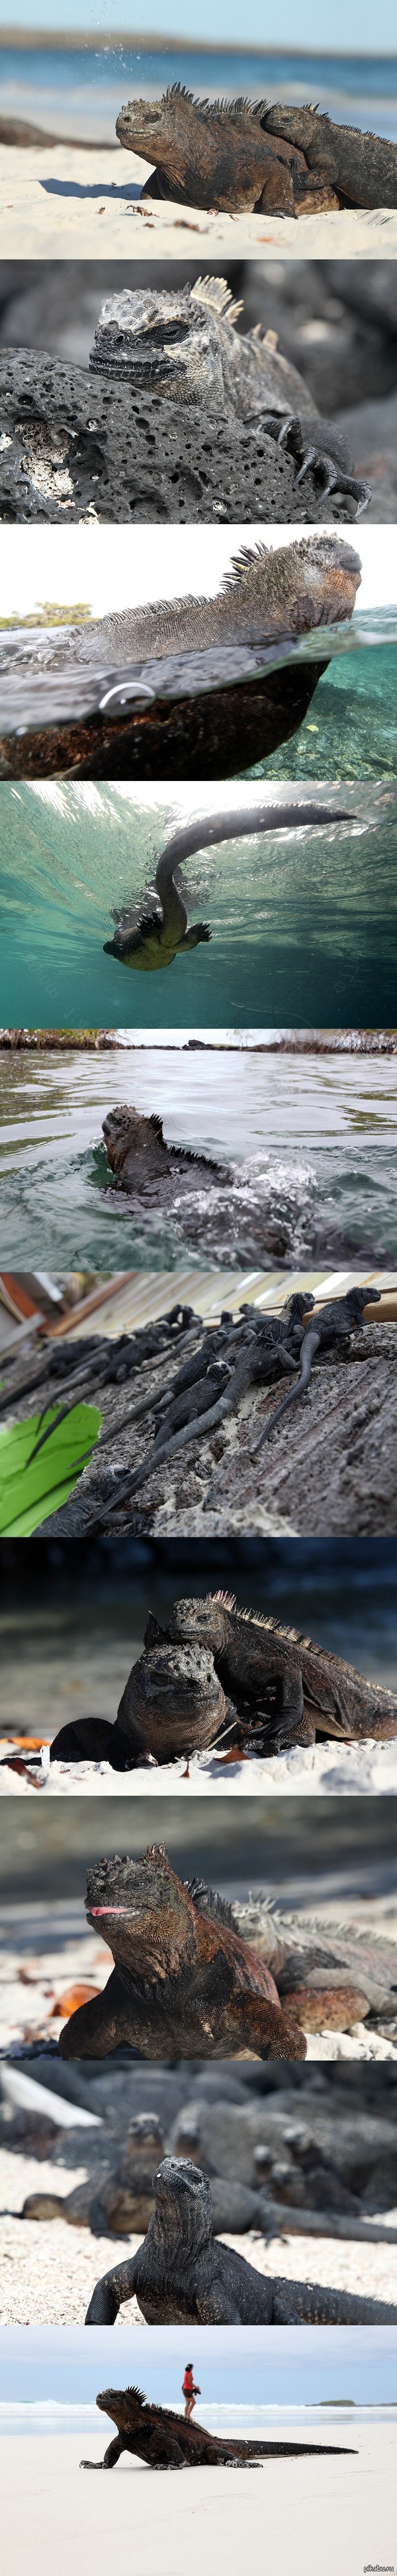 Galapagos Islands. - marine iguana, Iguana, Galapagos Islands, Longpost